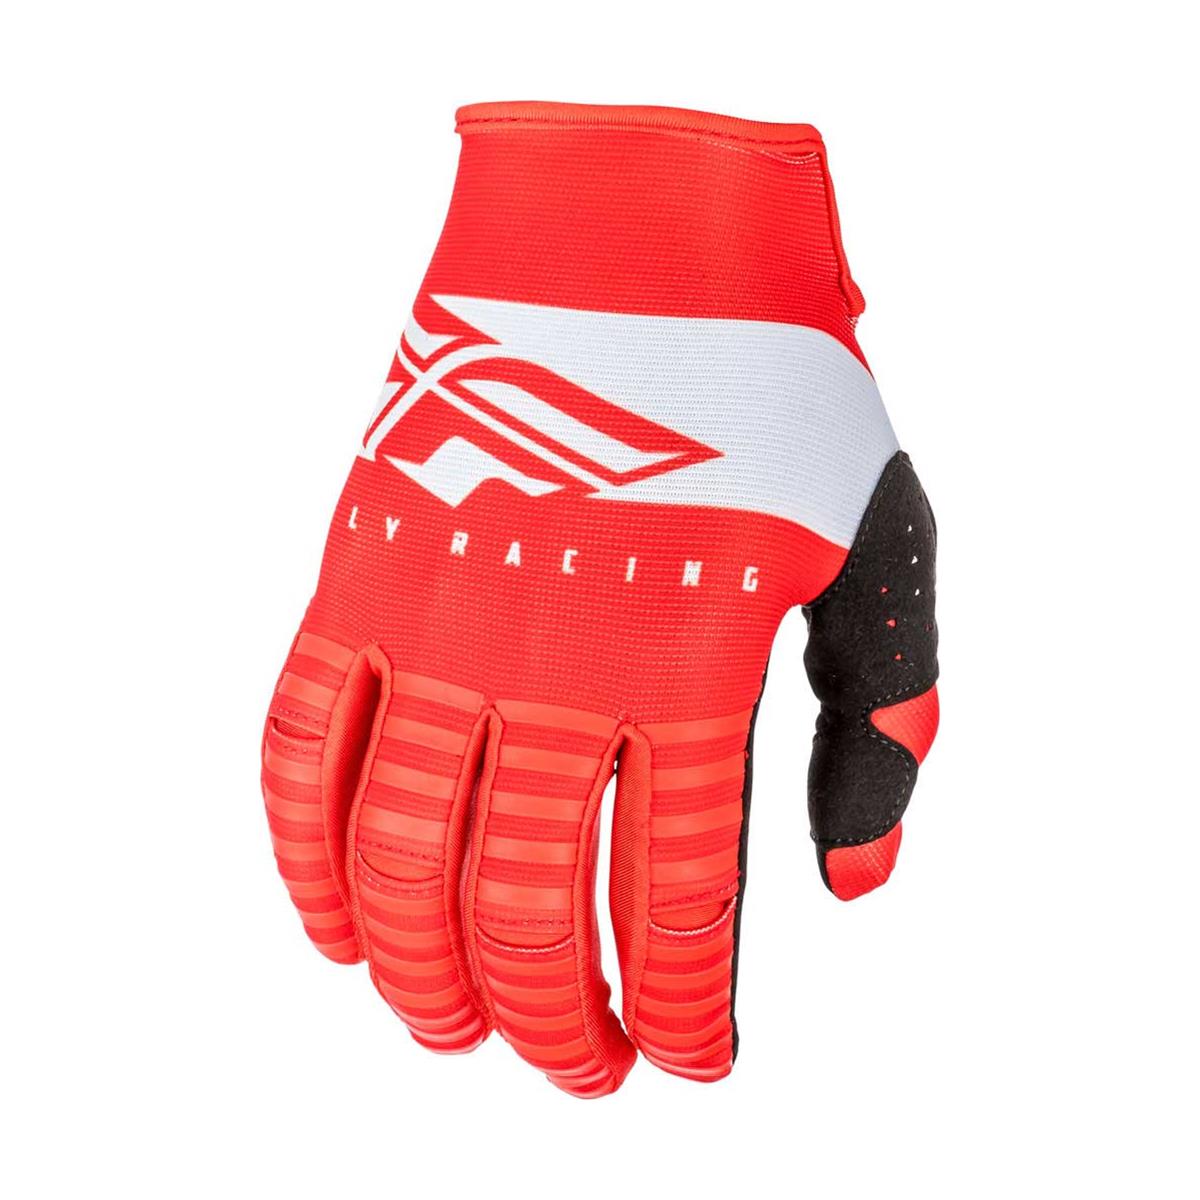 Fly Racing Handschuhe Kinetic Shield Rot/Weiß